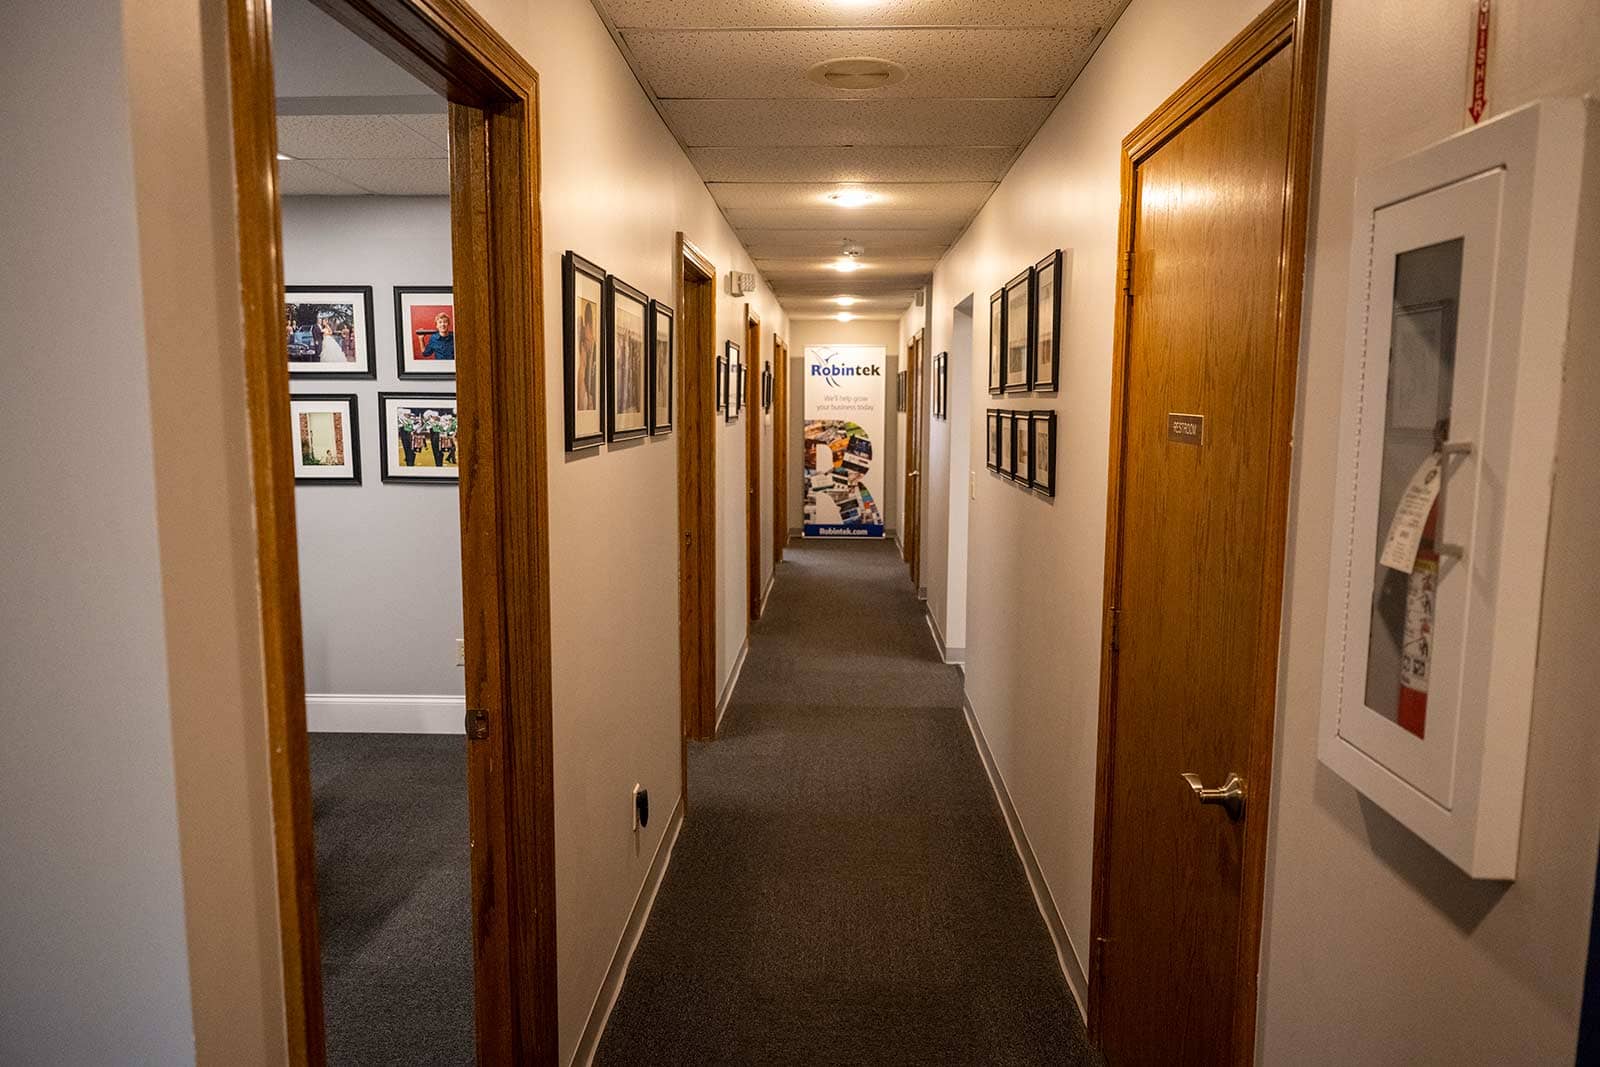 Robintek Westerville Office Rentals Hallway